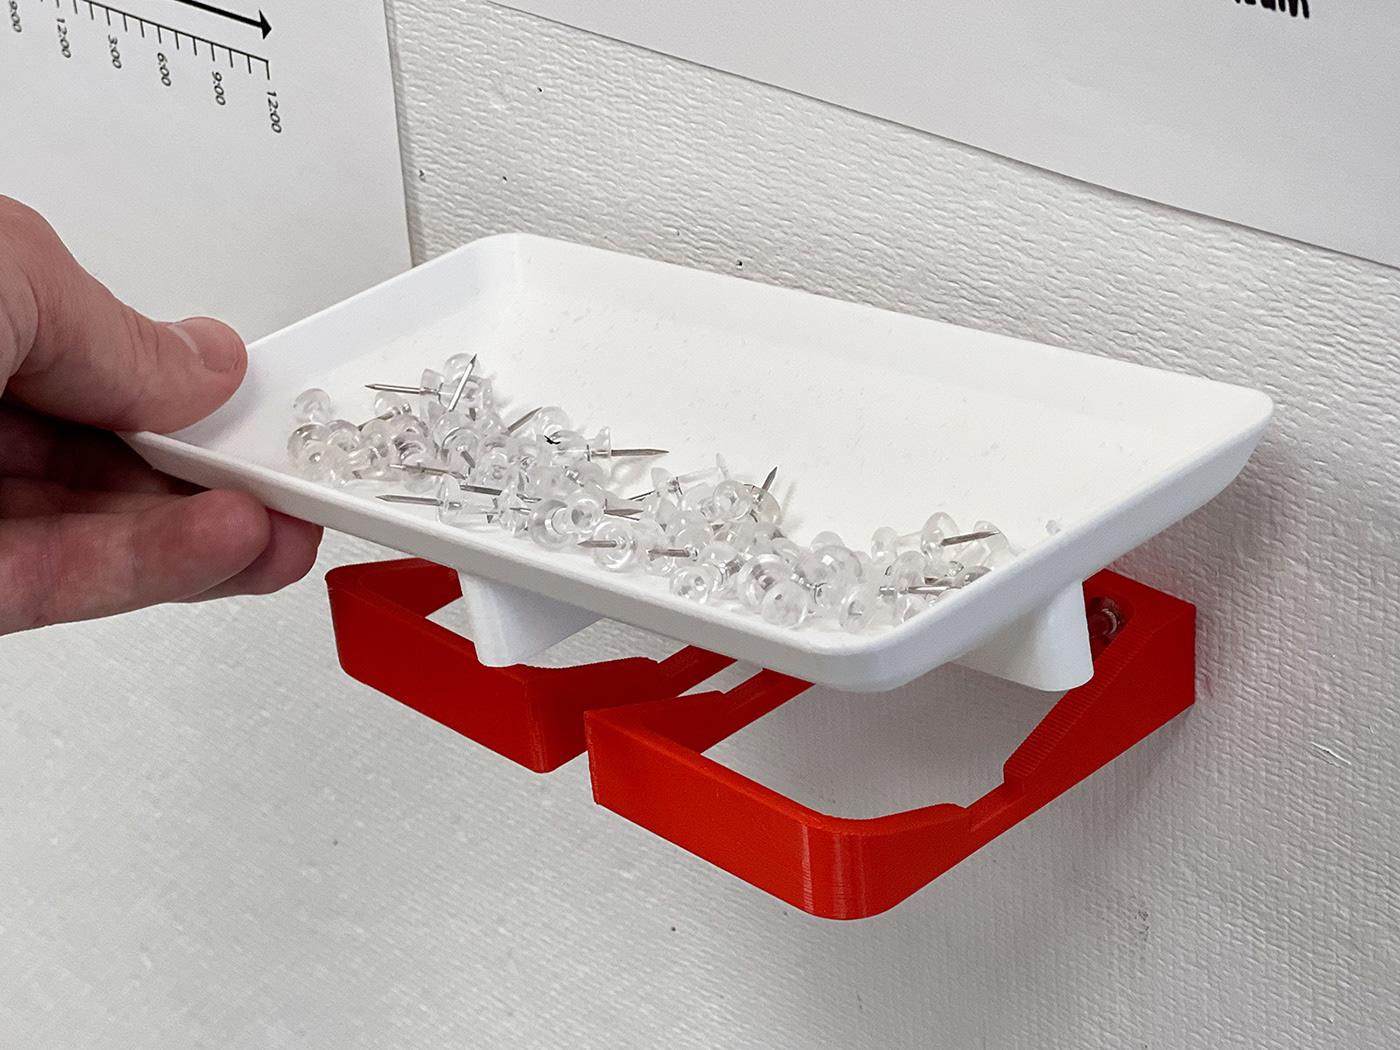 thumbtack tray holder human centered design 3d printing